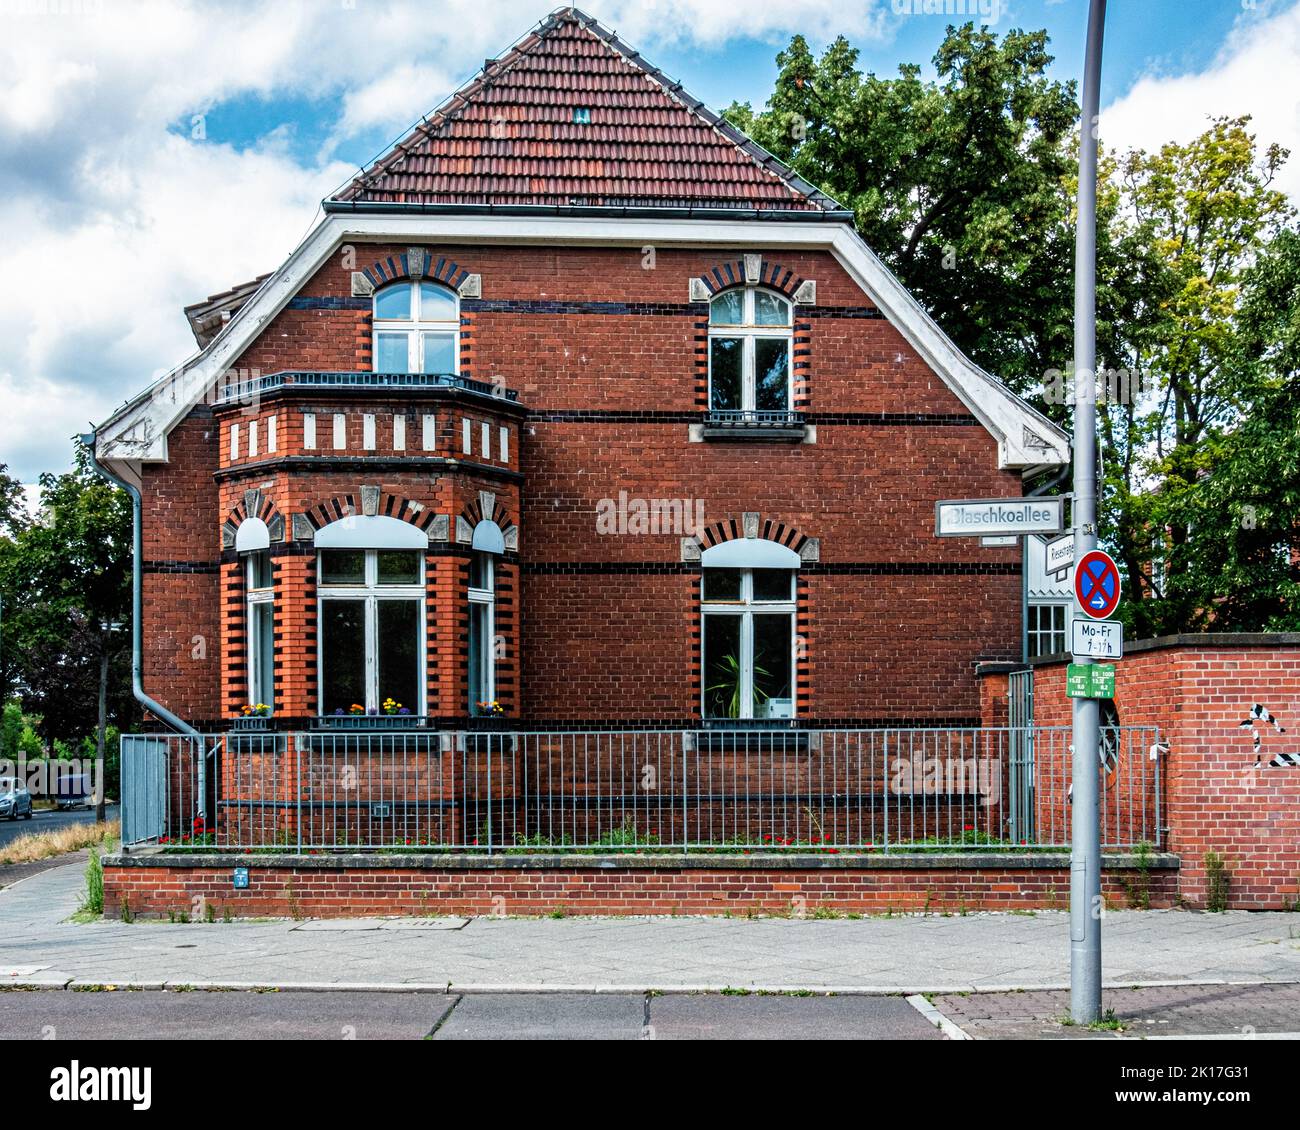 Red clinker brick residential building on Cnr Blaschkoallee & Riesestrasse,, Britz, Neukölln, Berlin, Stock Photo